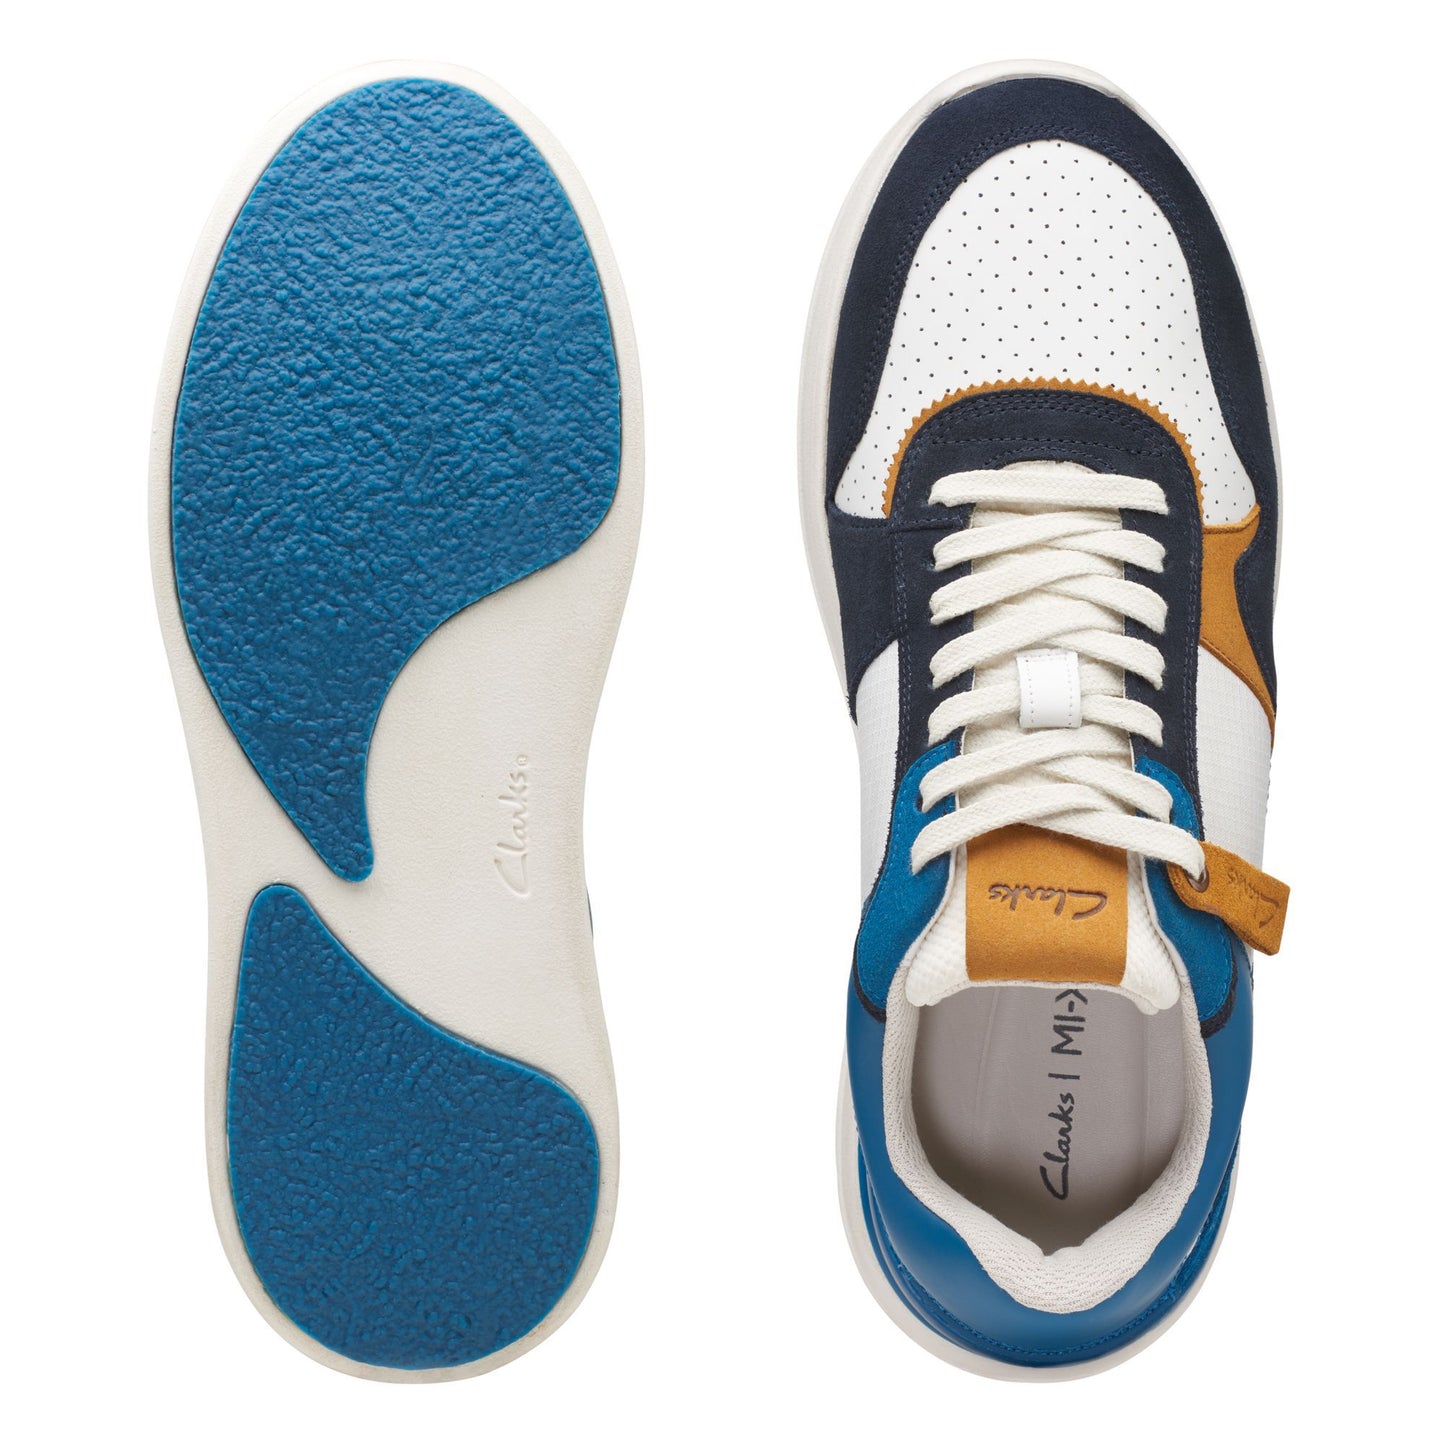 Sneakers De La Marca Clarks Para Hombre Modelo Racelite Tor Teal CombiEn Color Azul